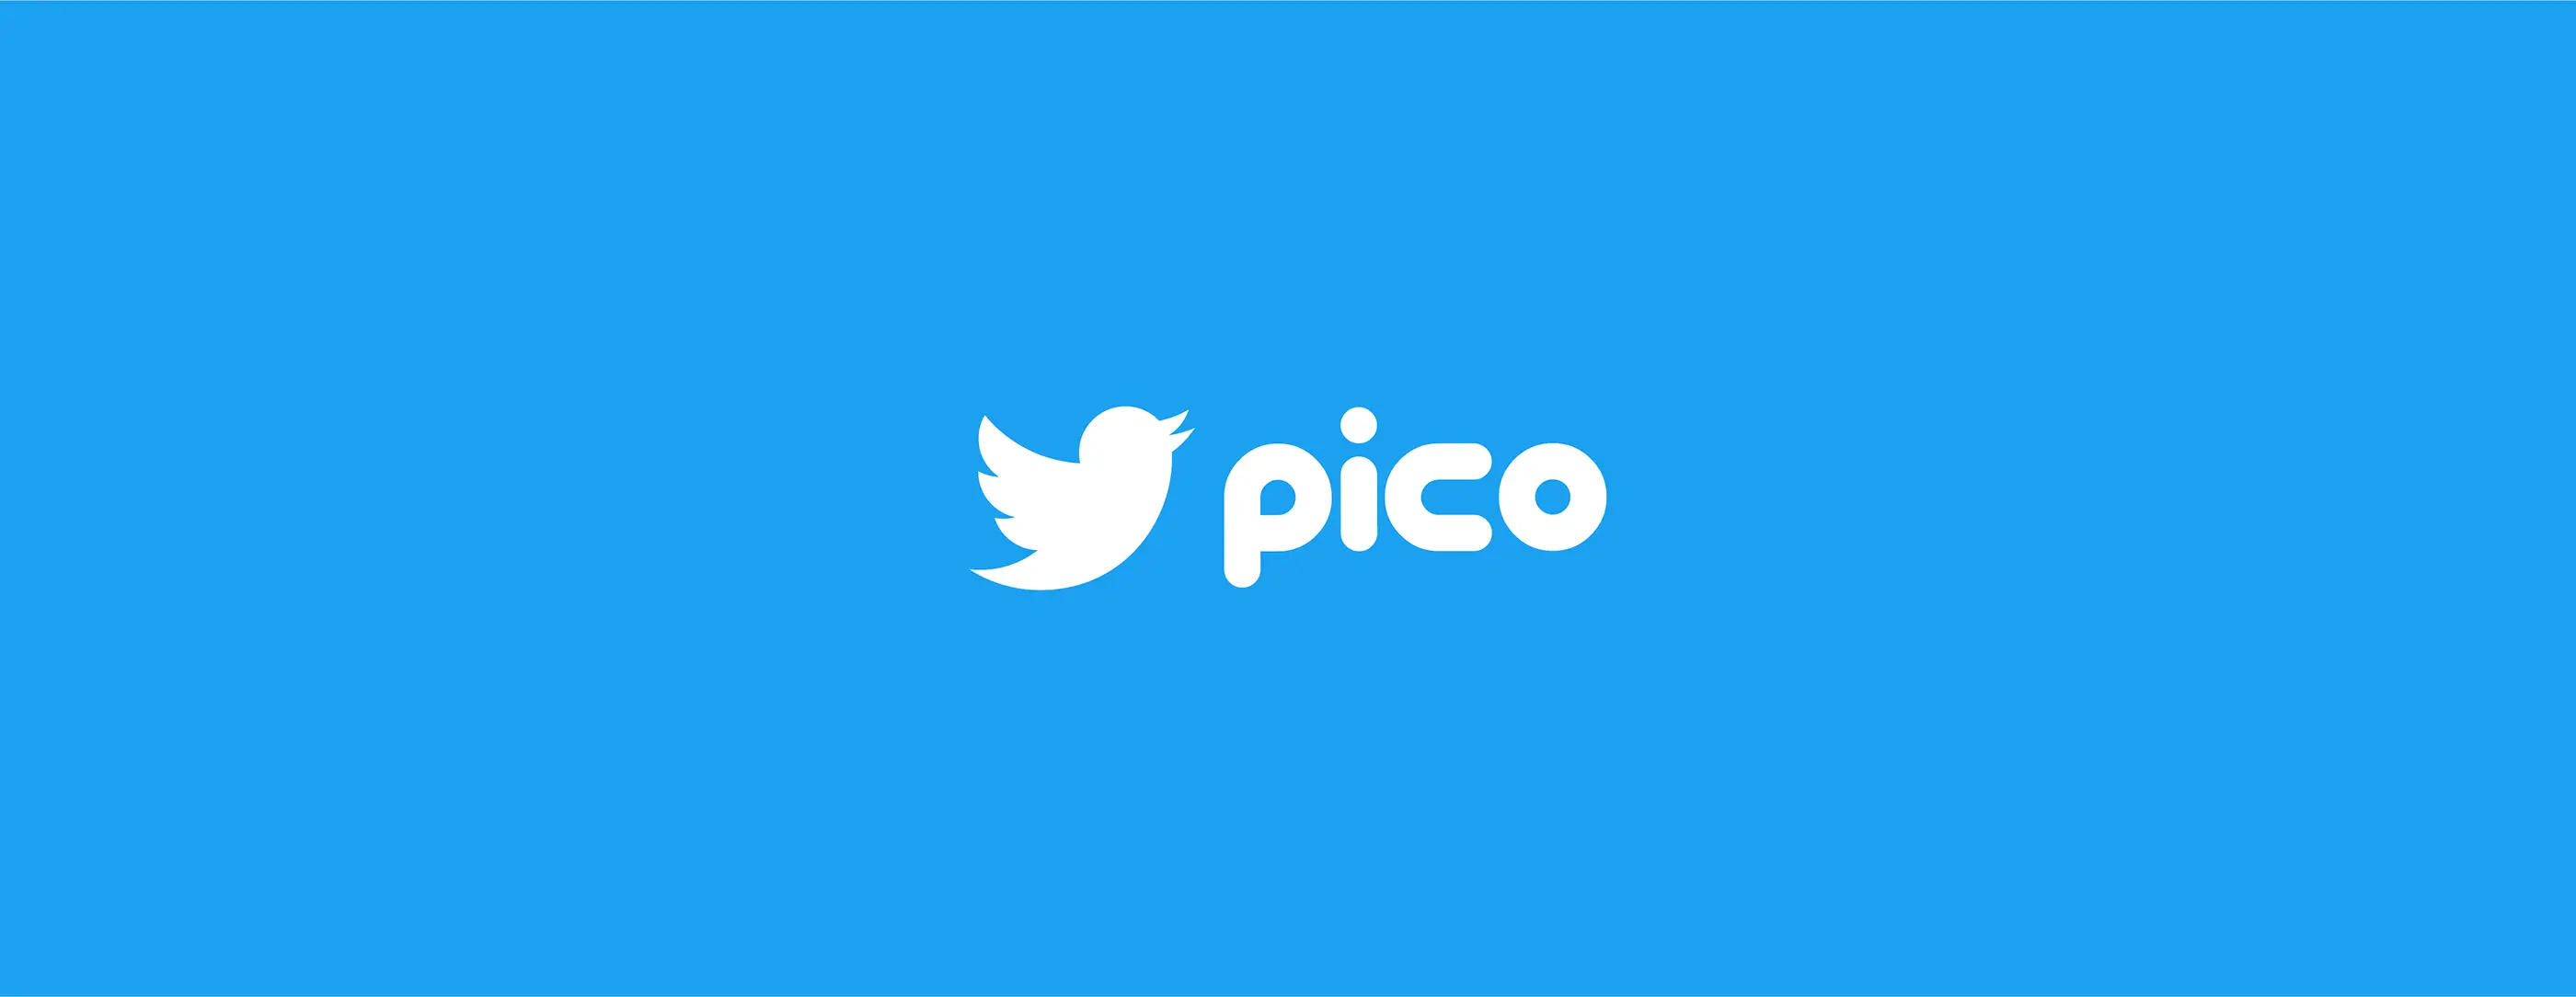 wersm-logo-font-twitter-pico